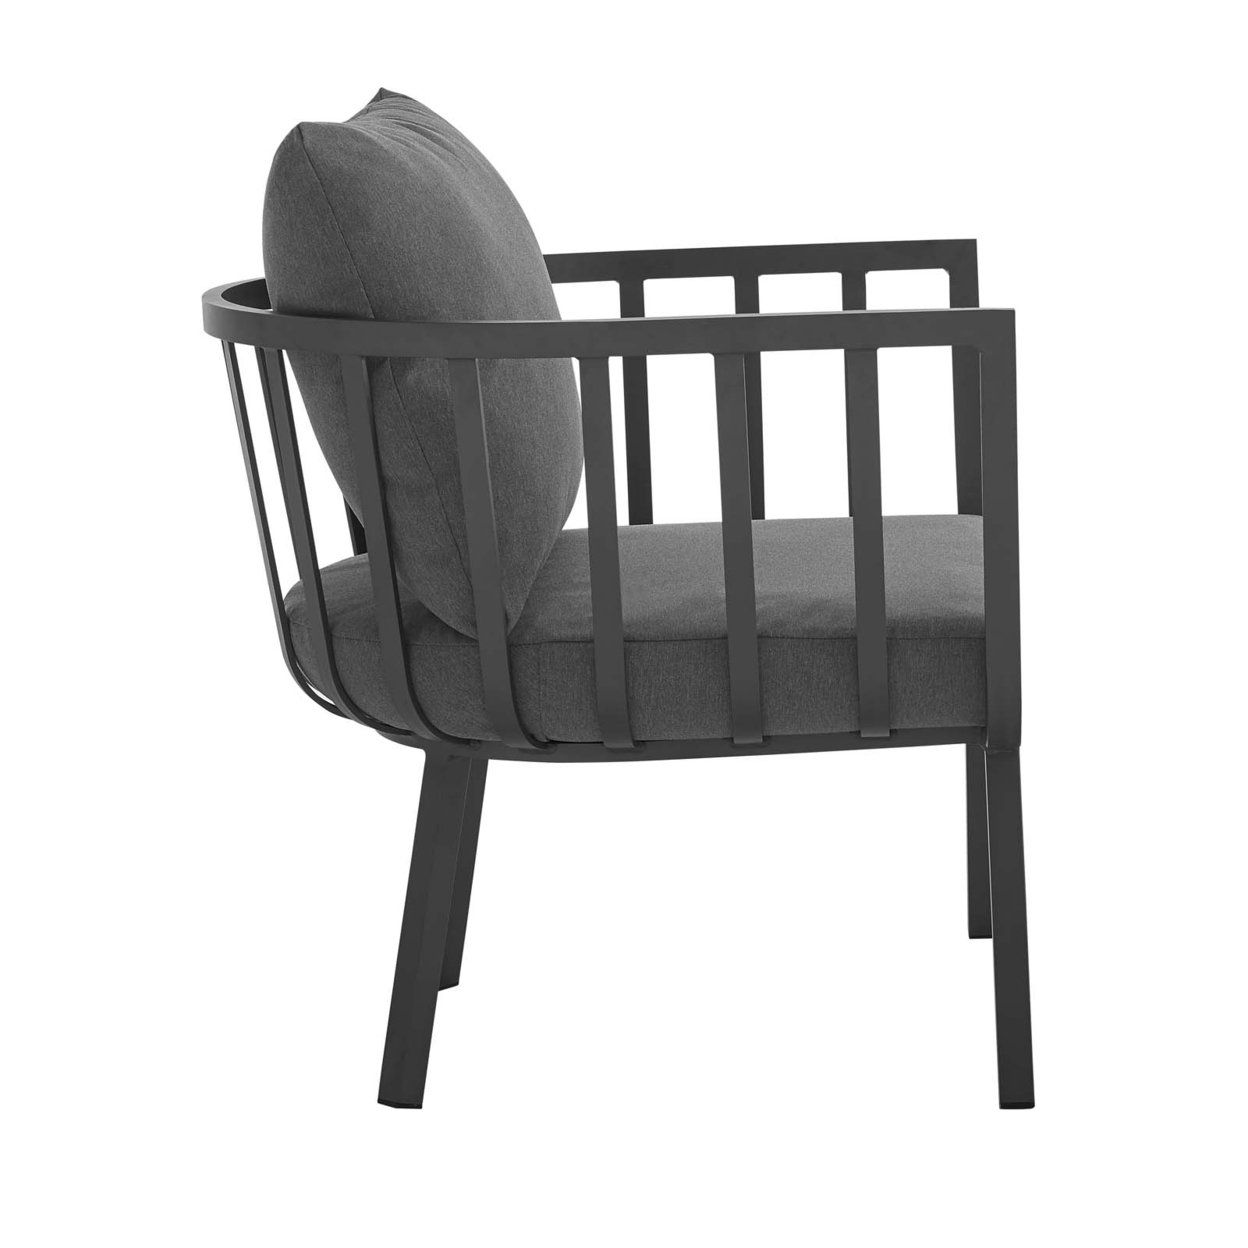 Riverside Outdoor Patio Aluminum Armchair Set Of 2, Gray Charcoal